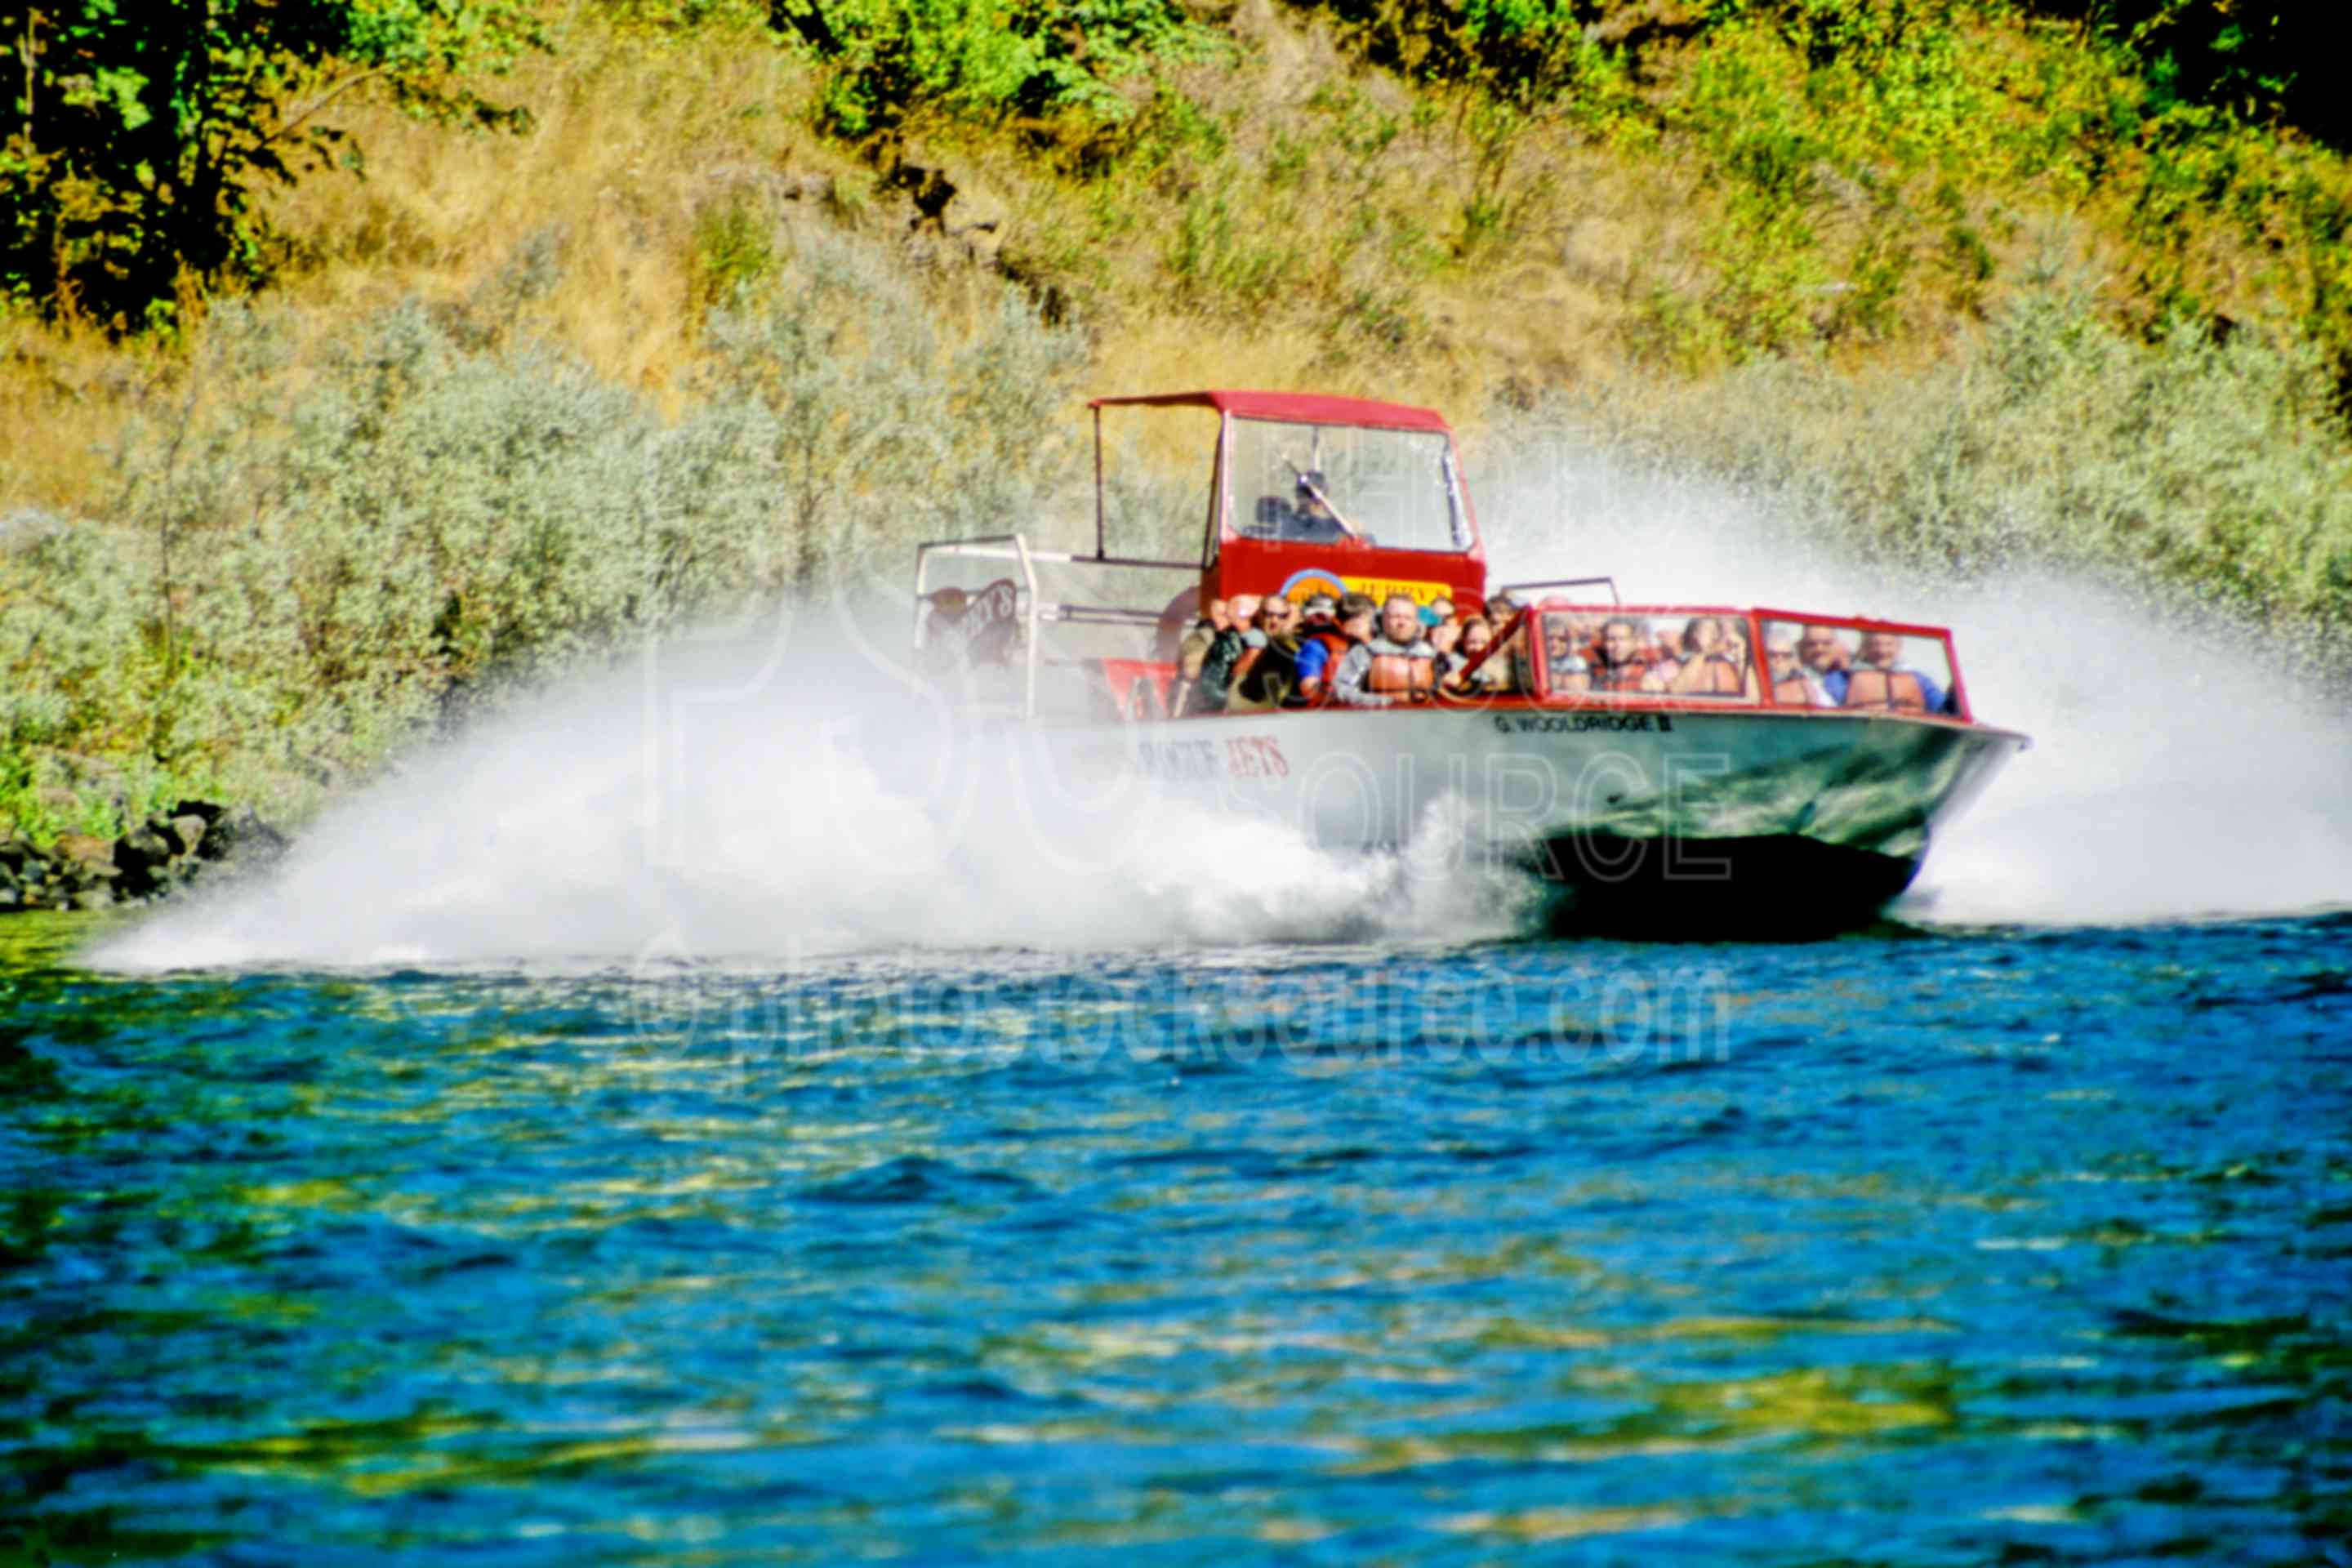 Rogue River Jet Boat,jet boat,rapids,river,usas,lakes rivers,boats